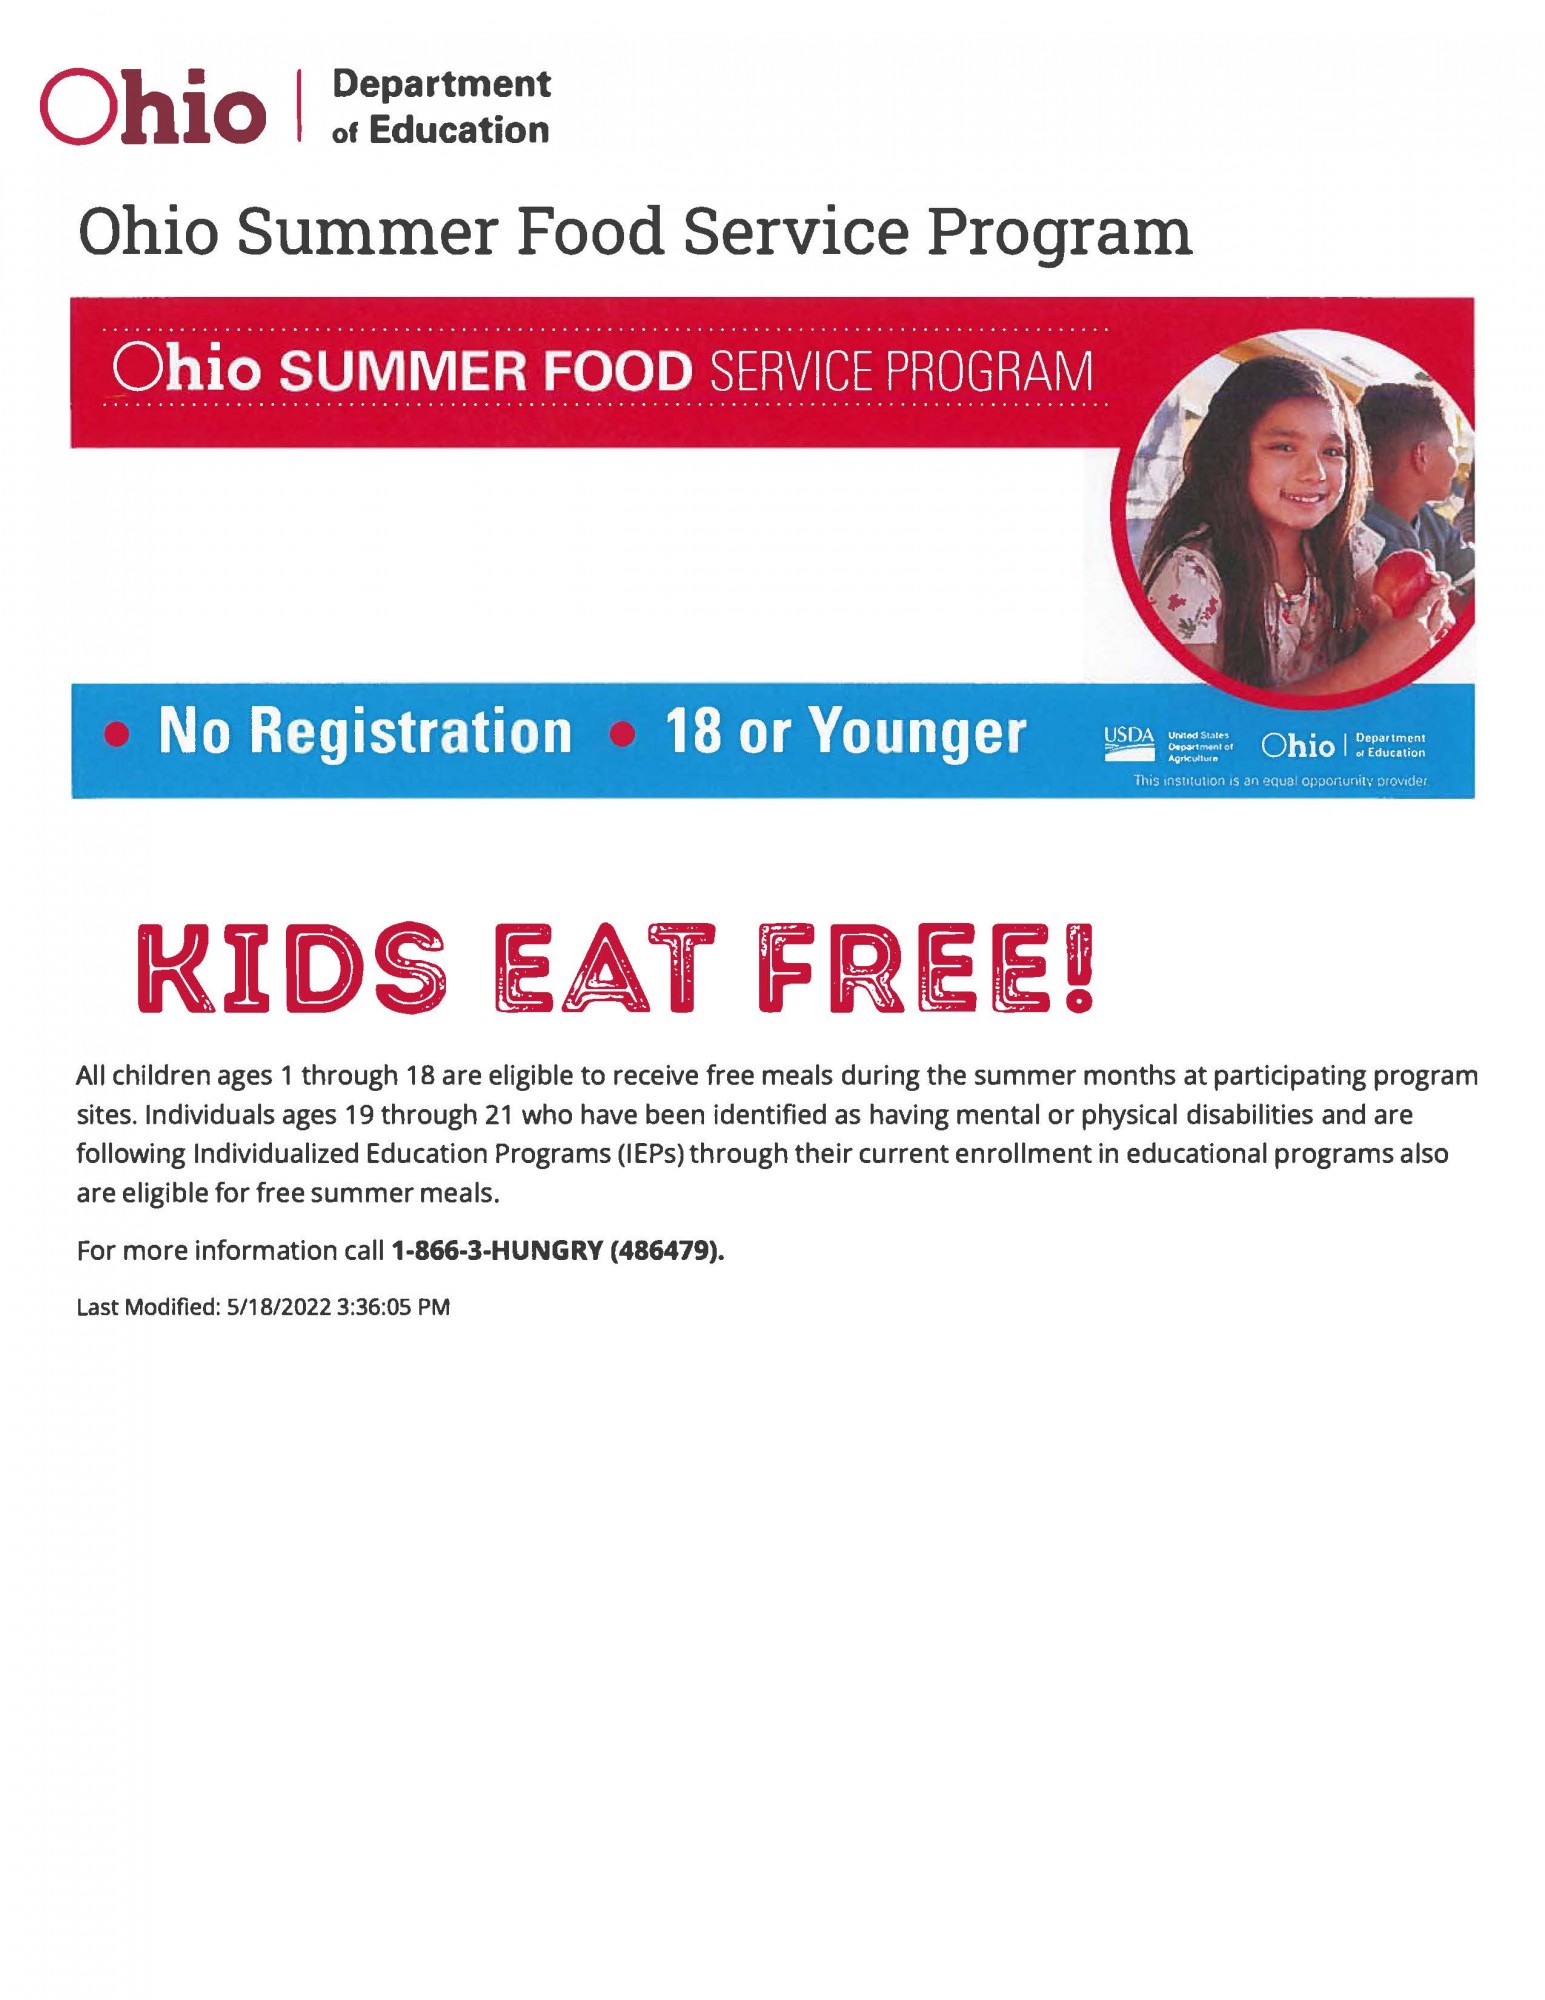 Ohio Summer Food Services